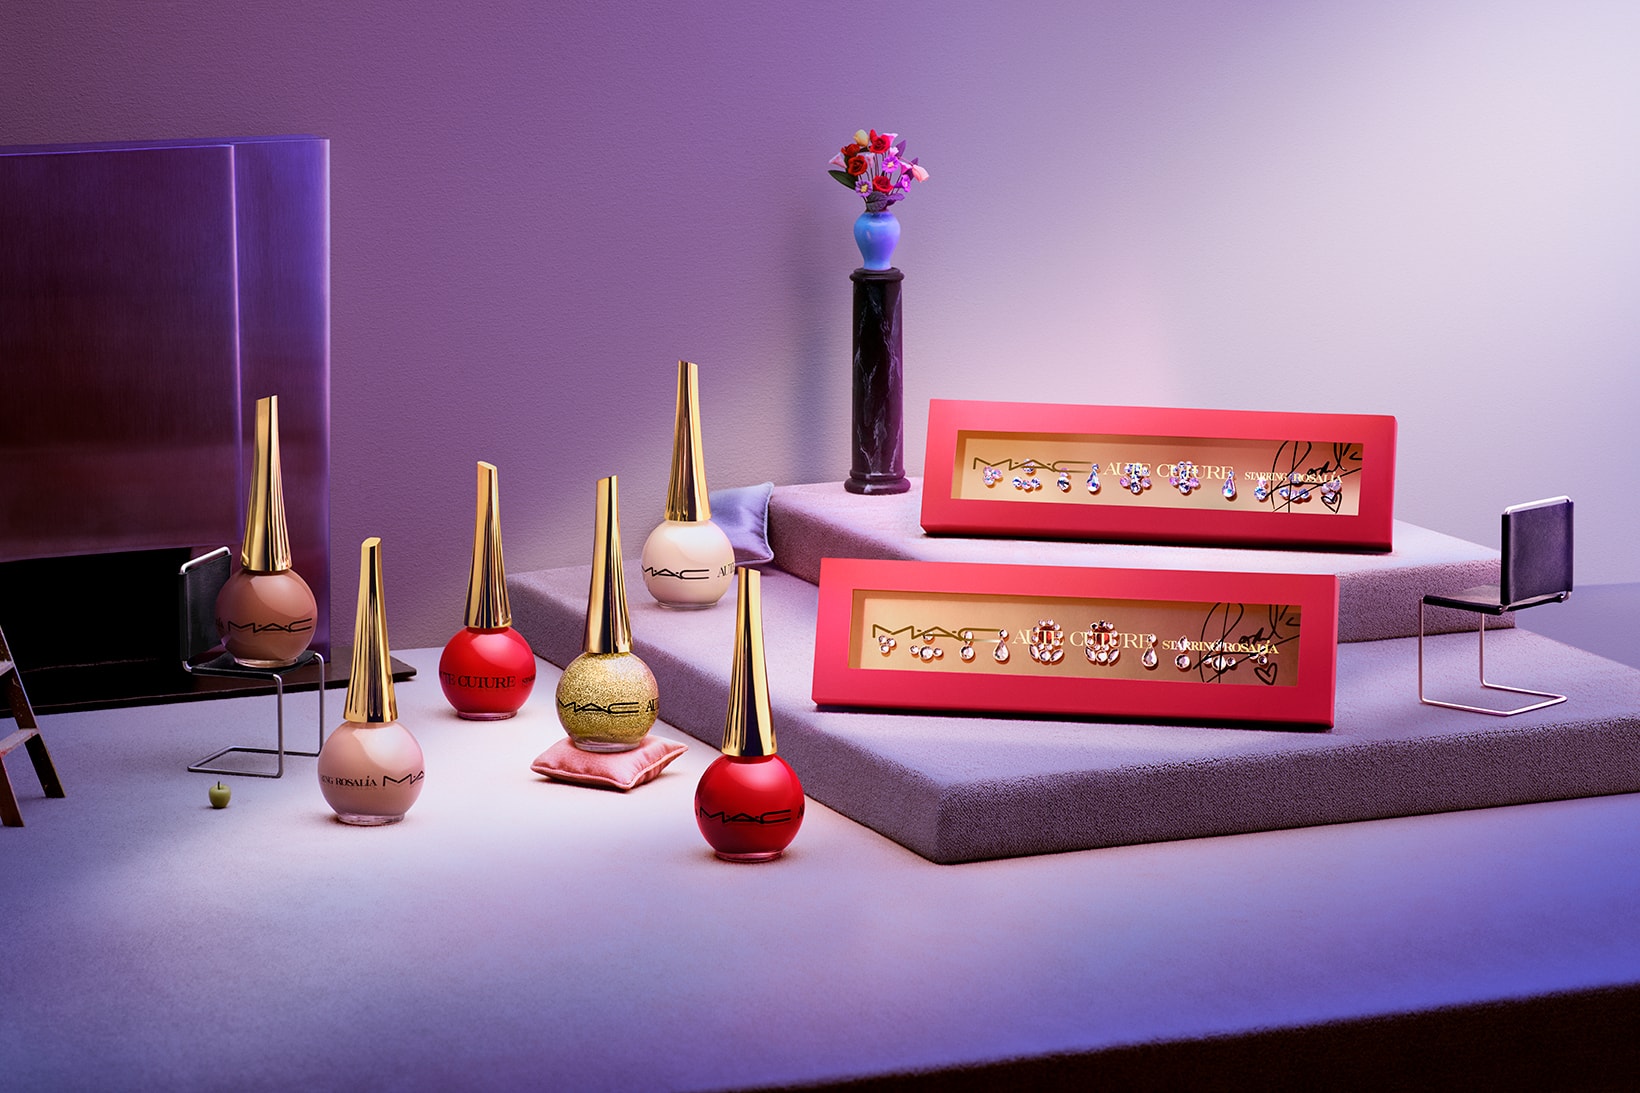 Rosalía MAC Cosmetics Makeup Beauty Nail Polish Collection Eyeshadows Lipstick Highlighter